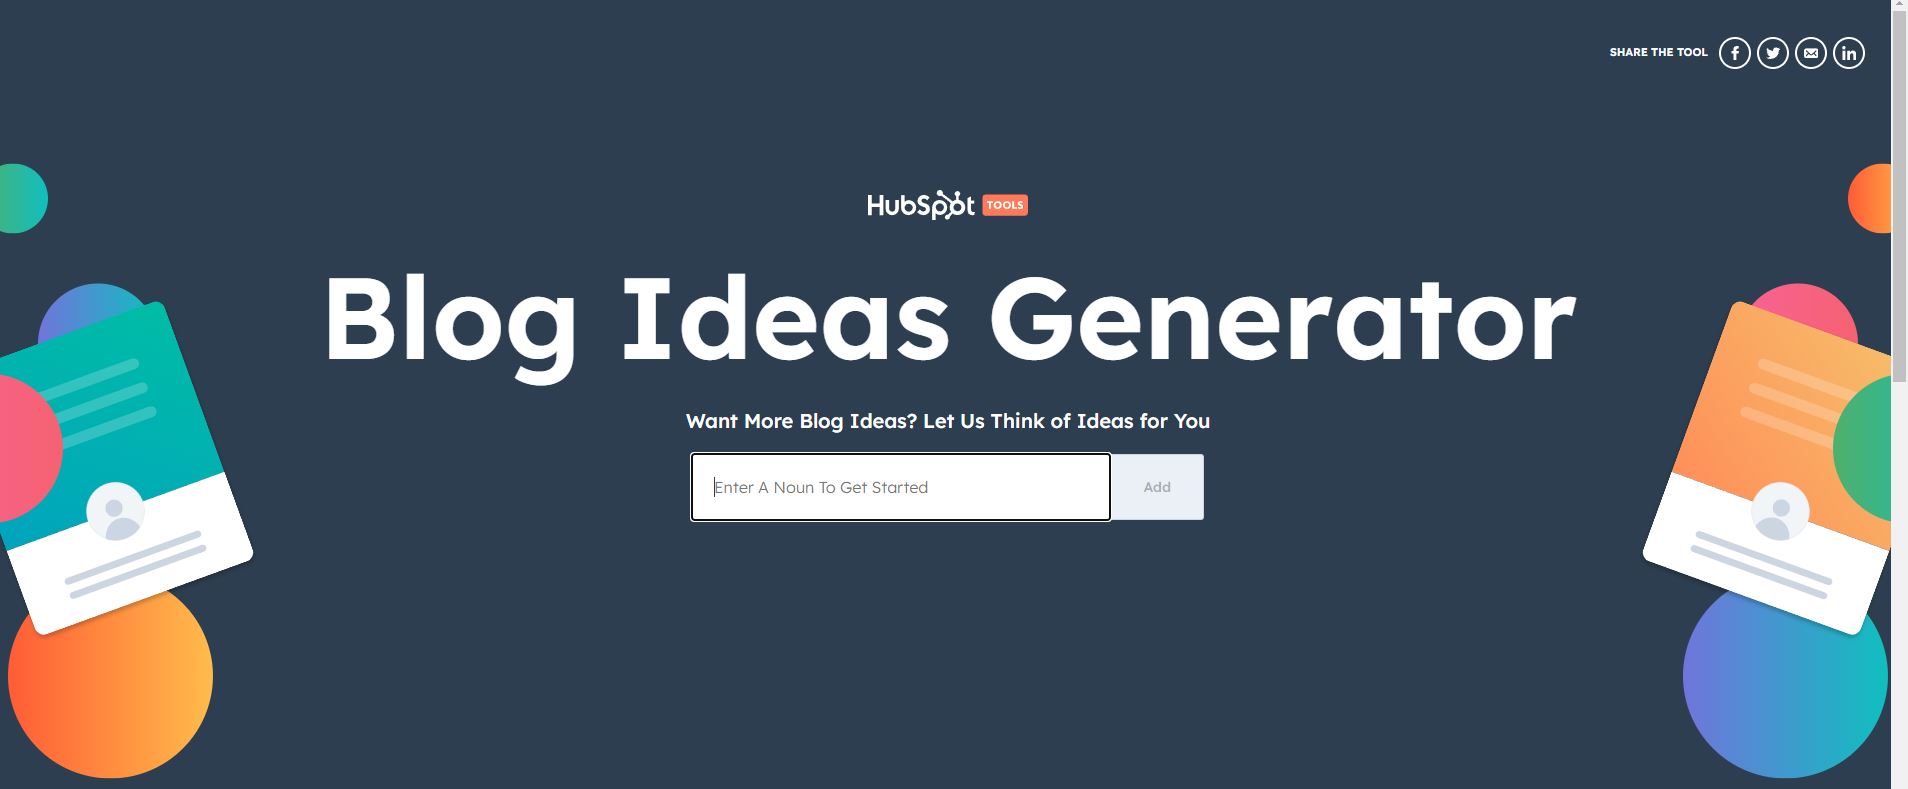 7 Free Headline Tools & Blog Title Generator - 2024